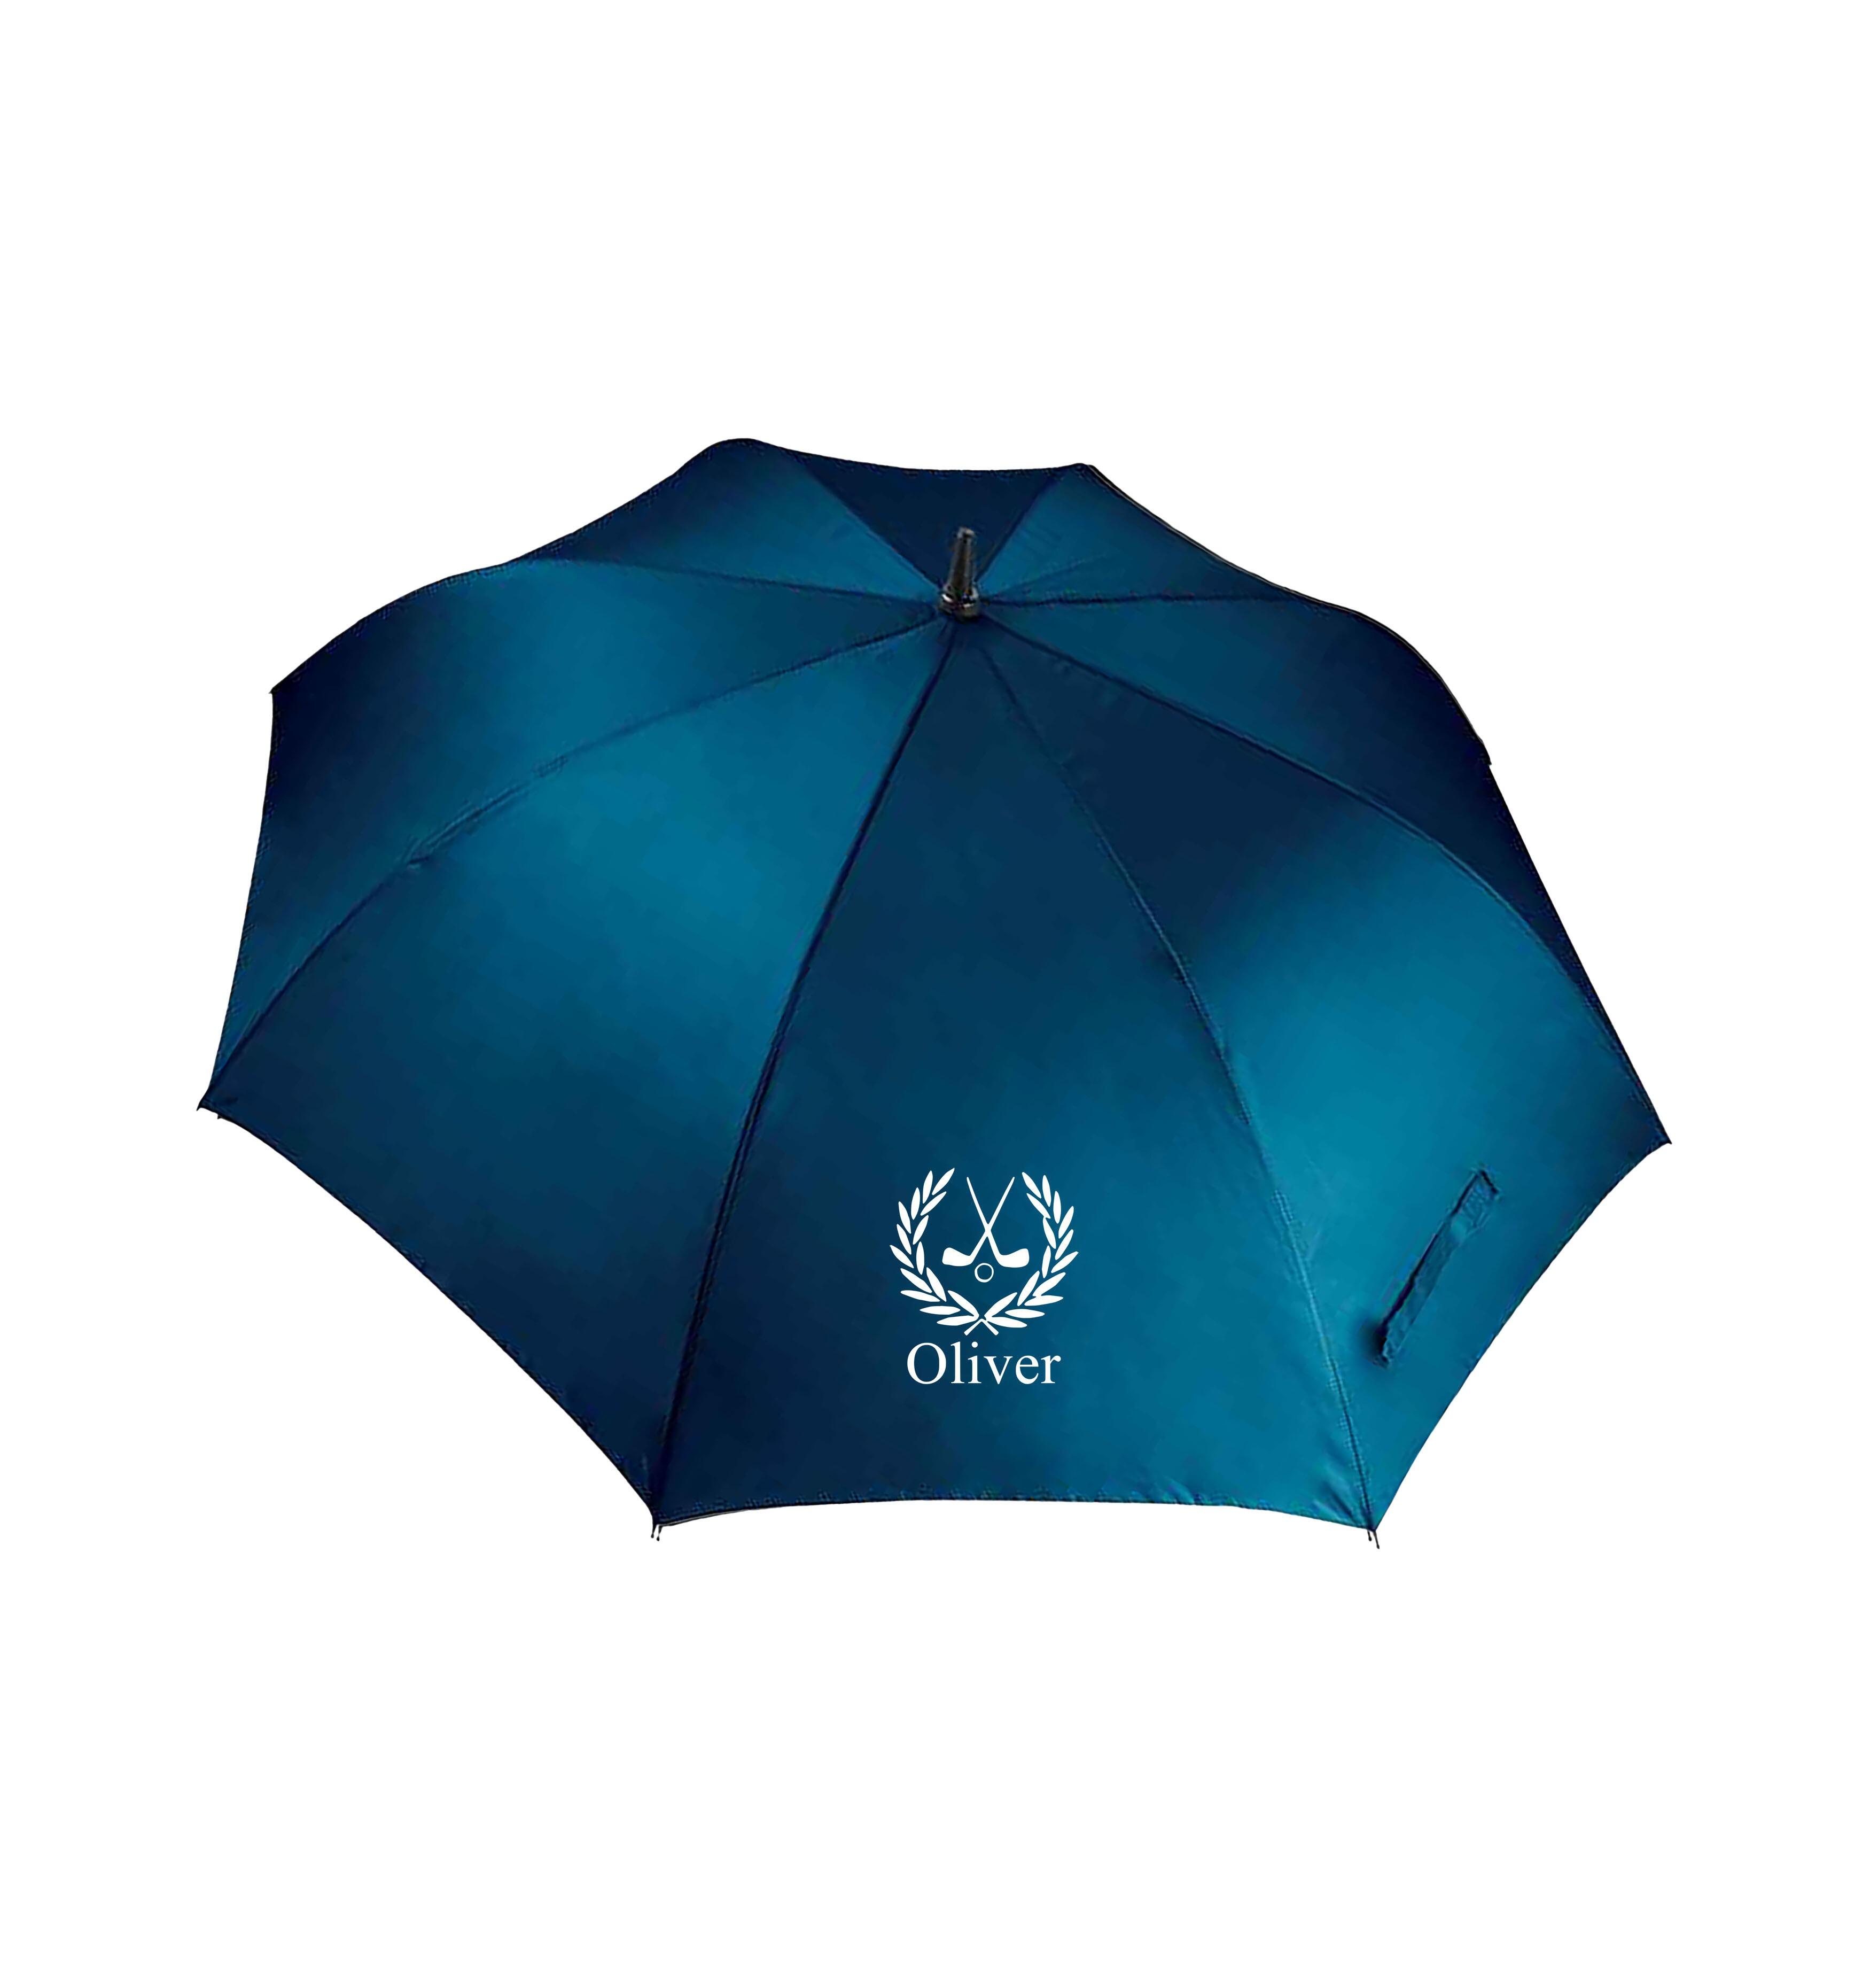 Personalised Large Golf Umbrella Navy